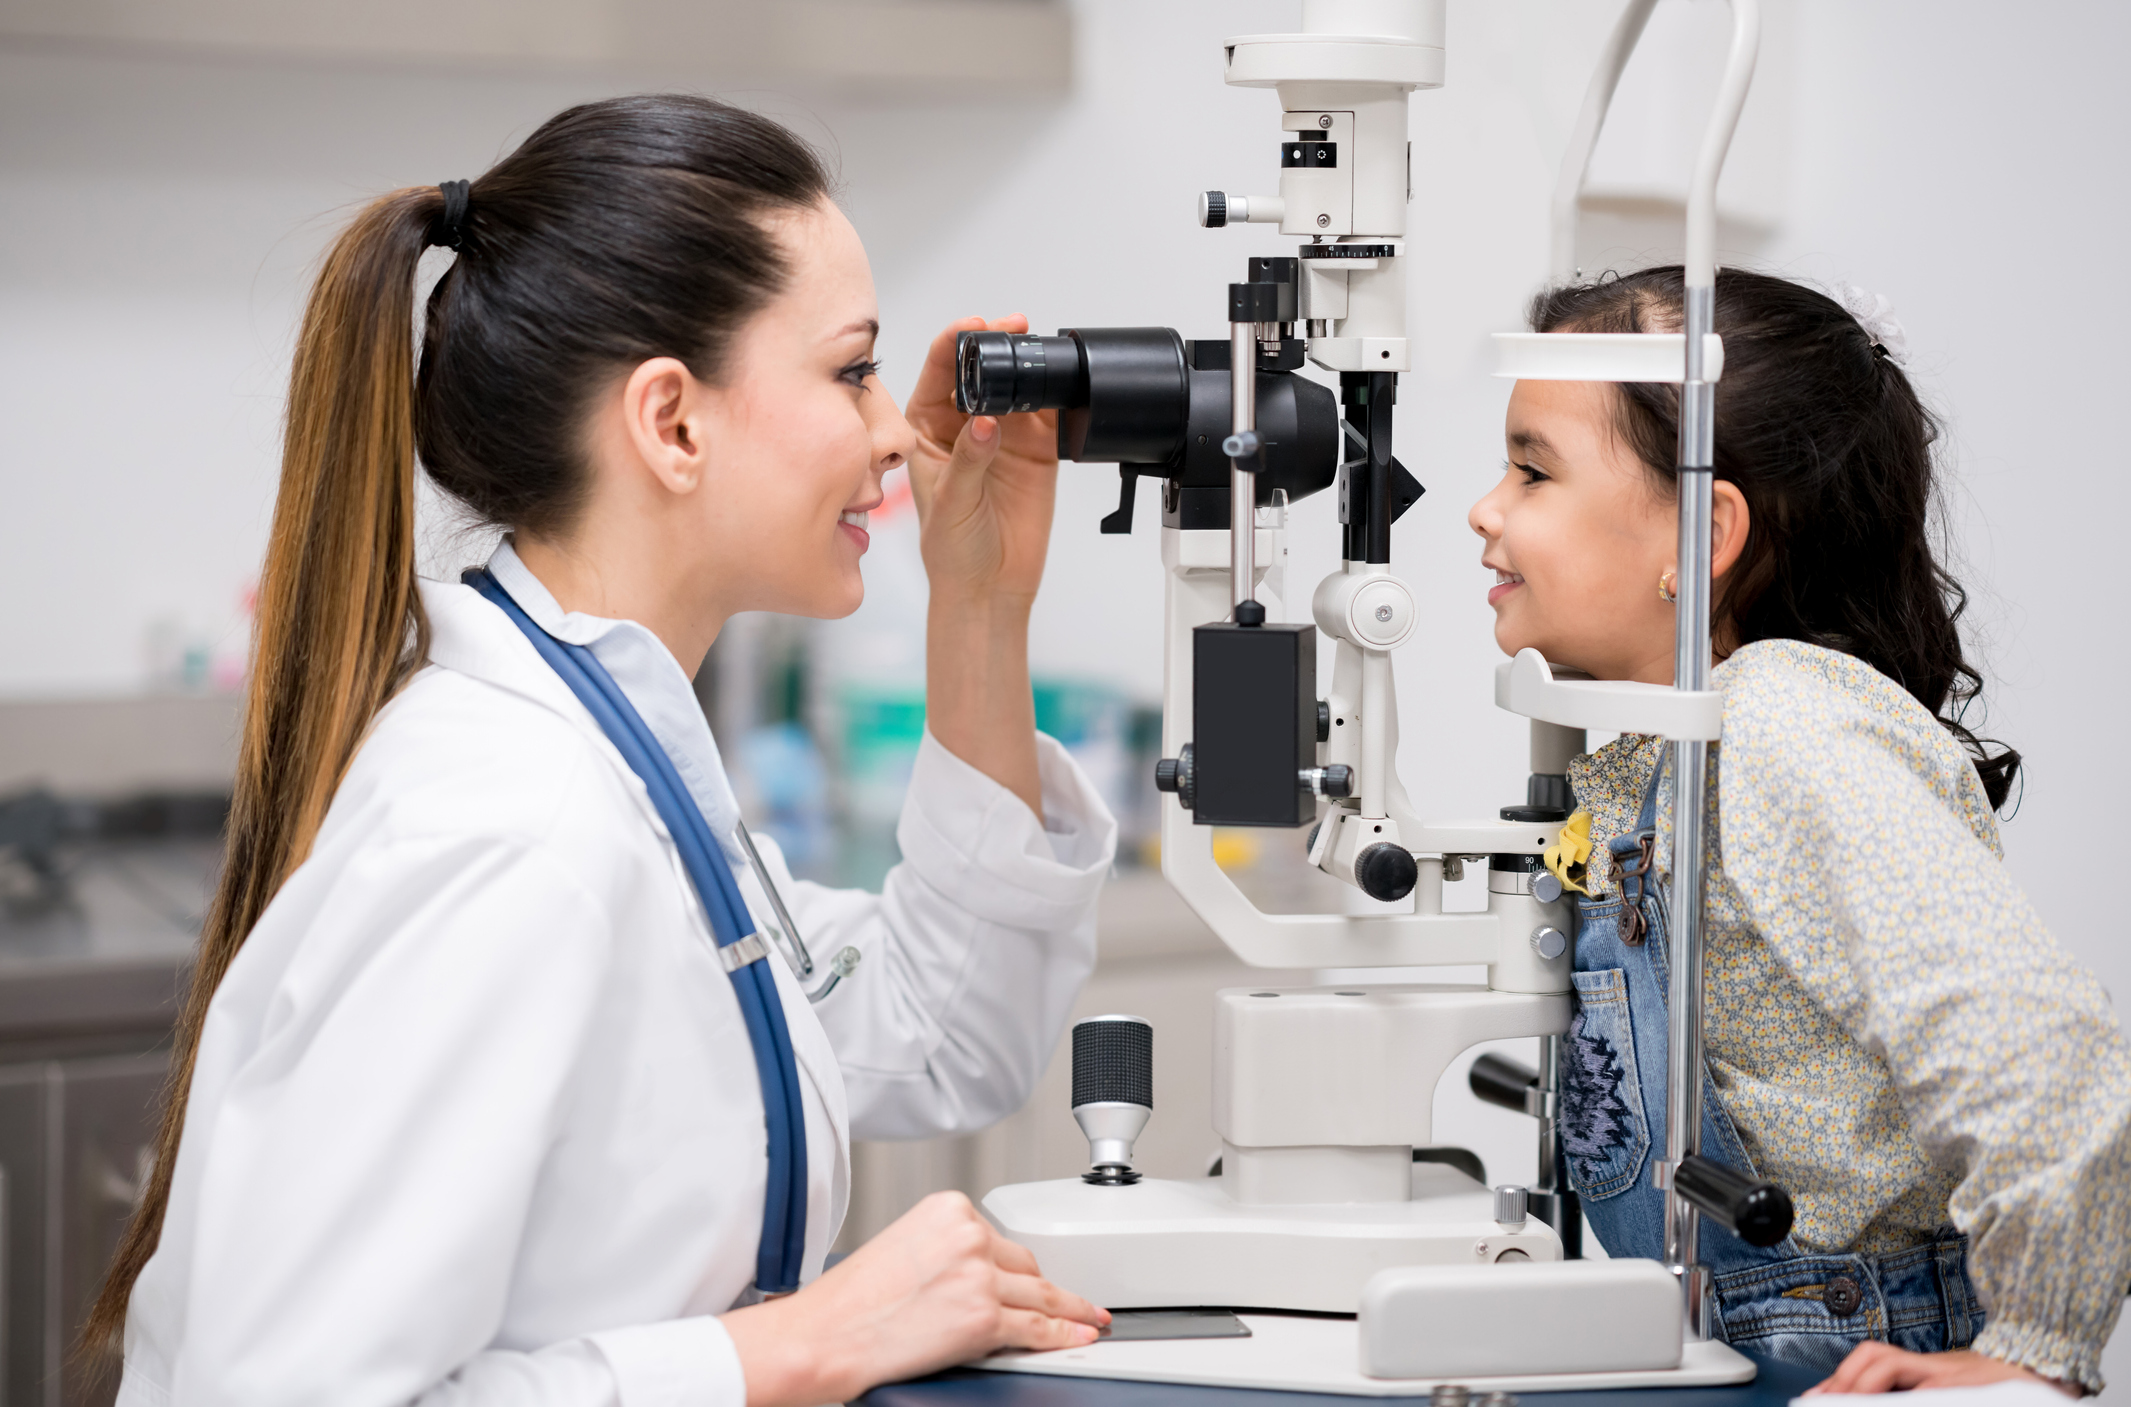 Girl getting an eye exam at the optician